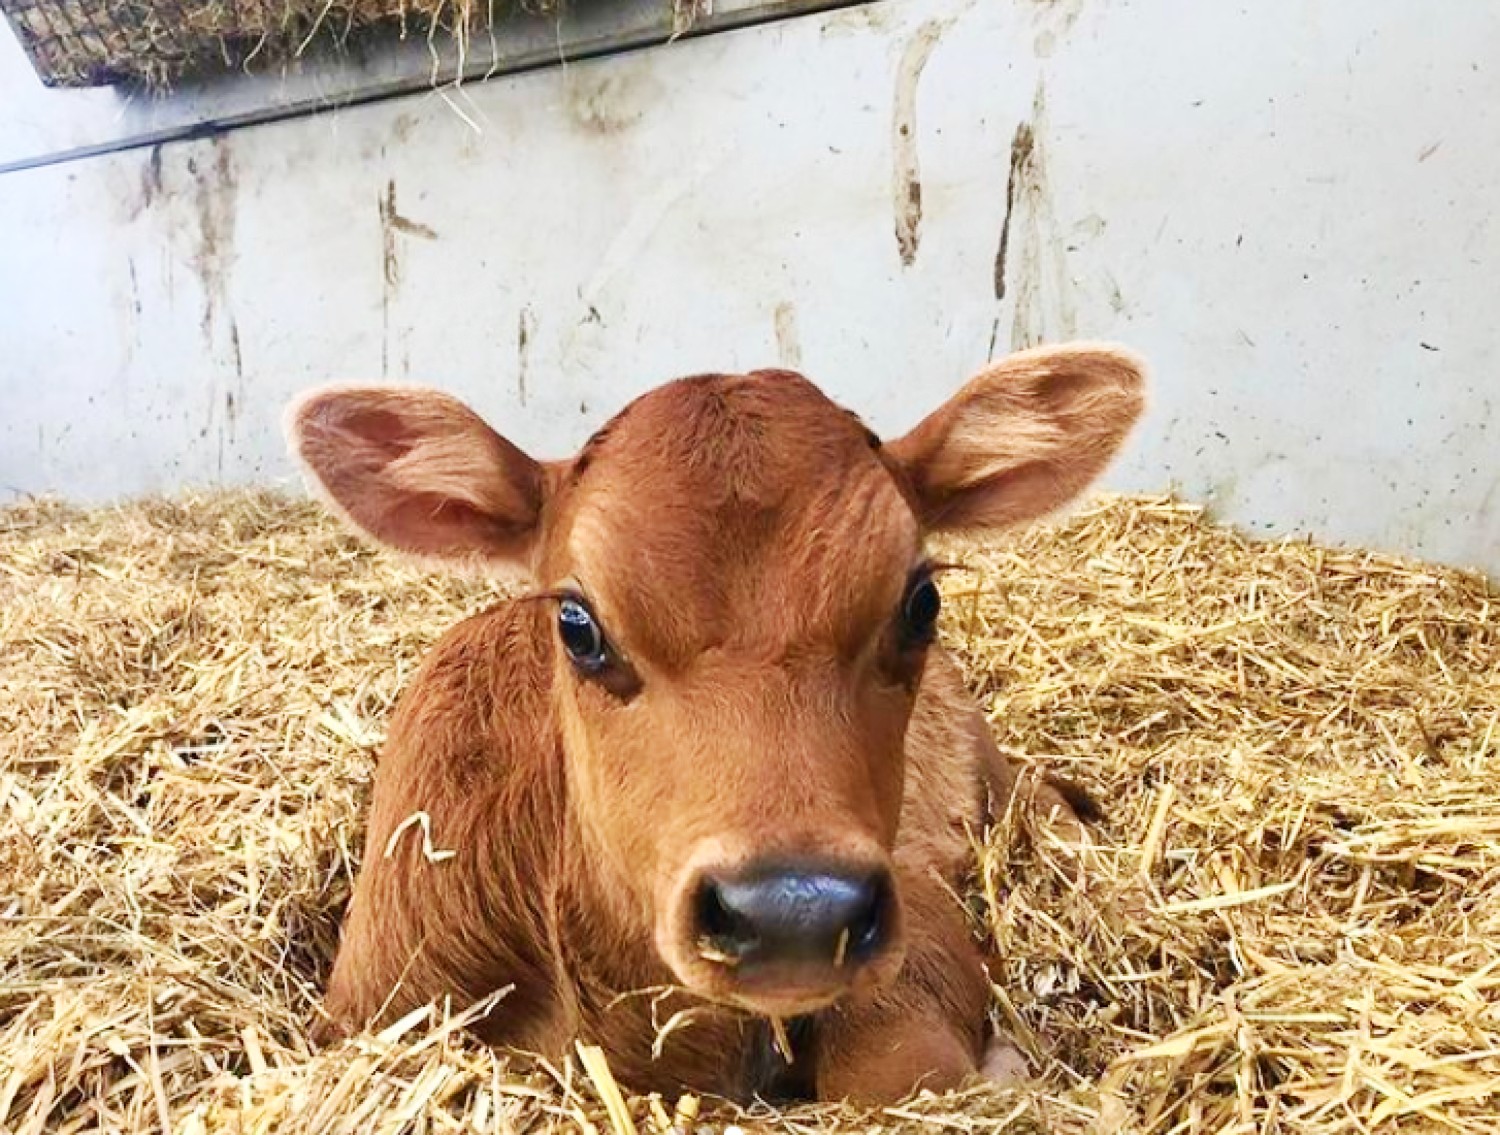 <img src="baby.jpg" alt="baby calf at national forest adventure farm"/> 